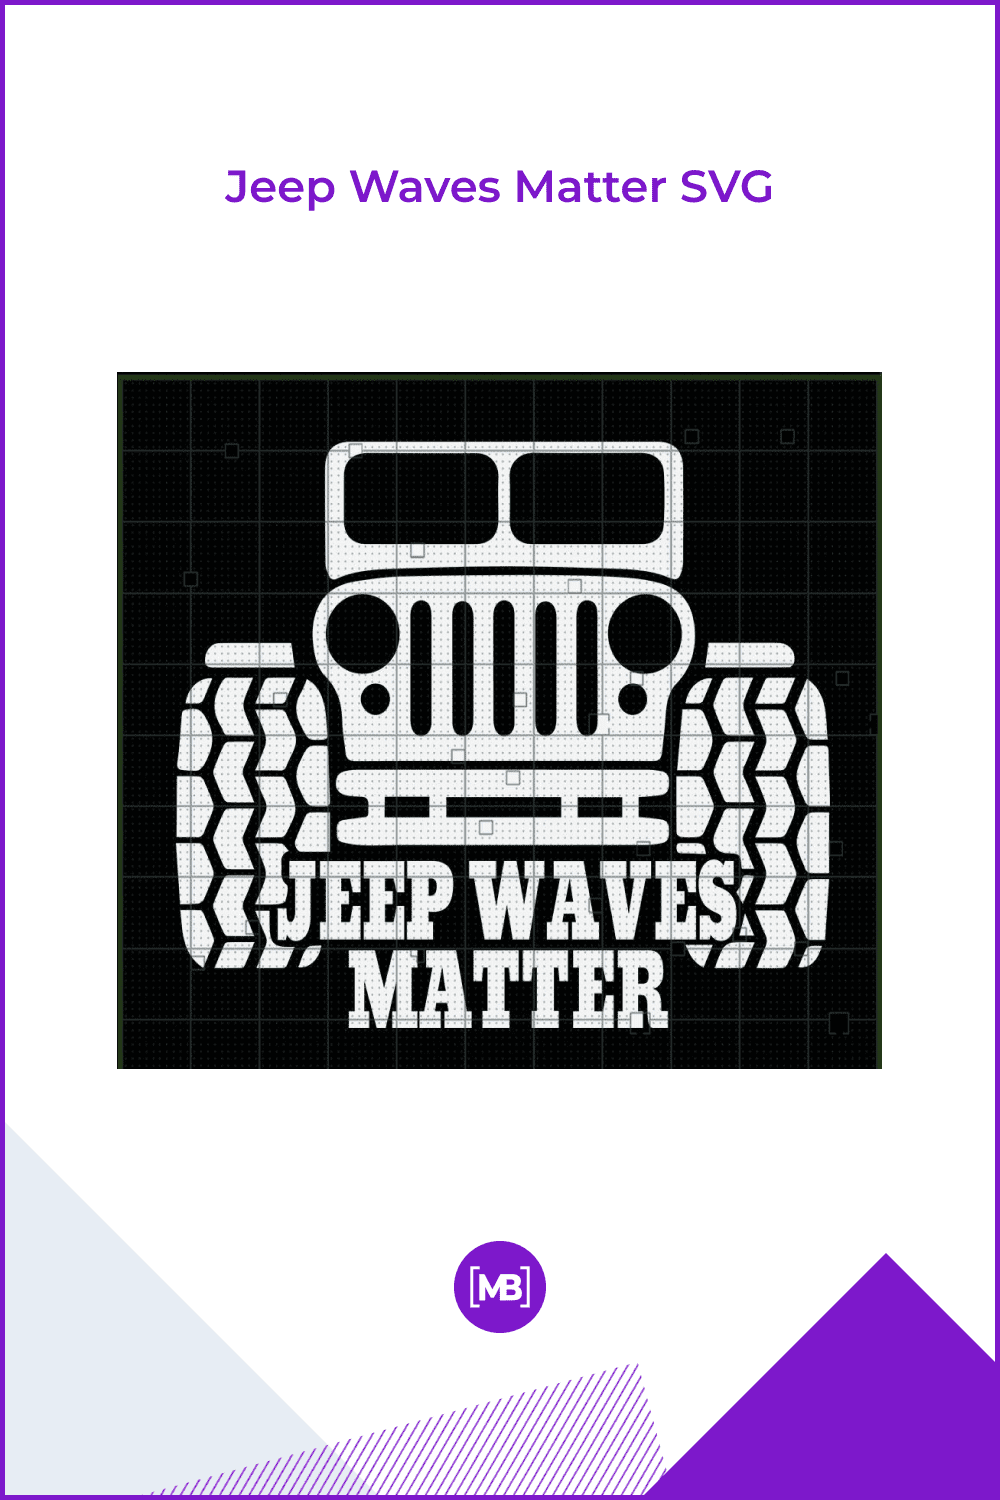 Jeep Waves Matter SVG.